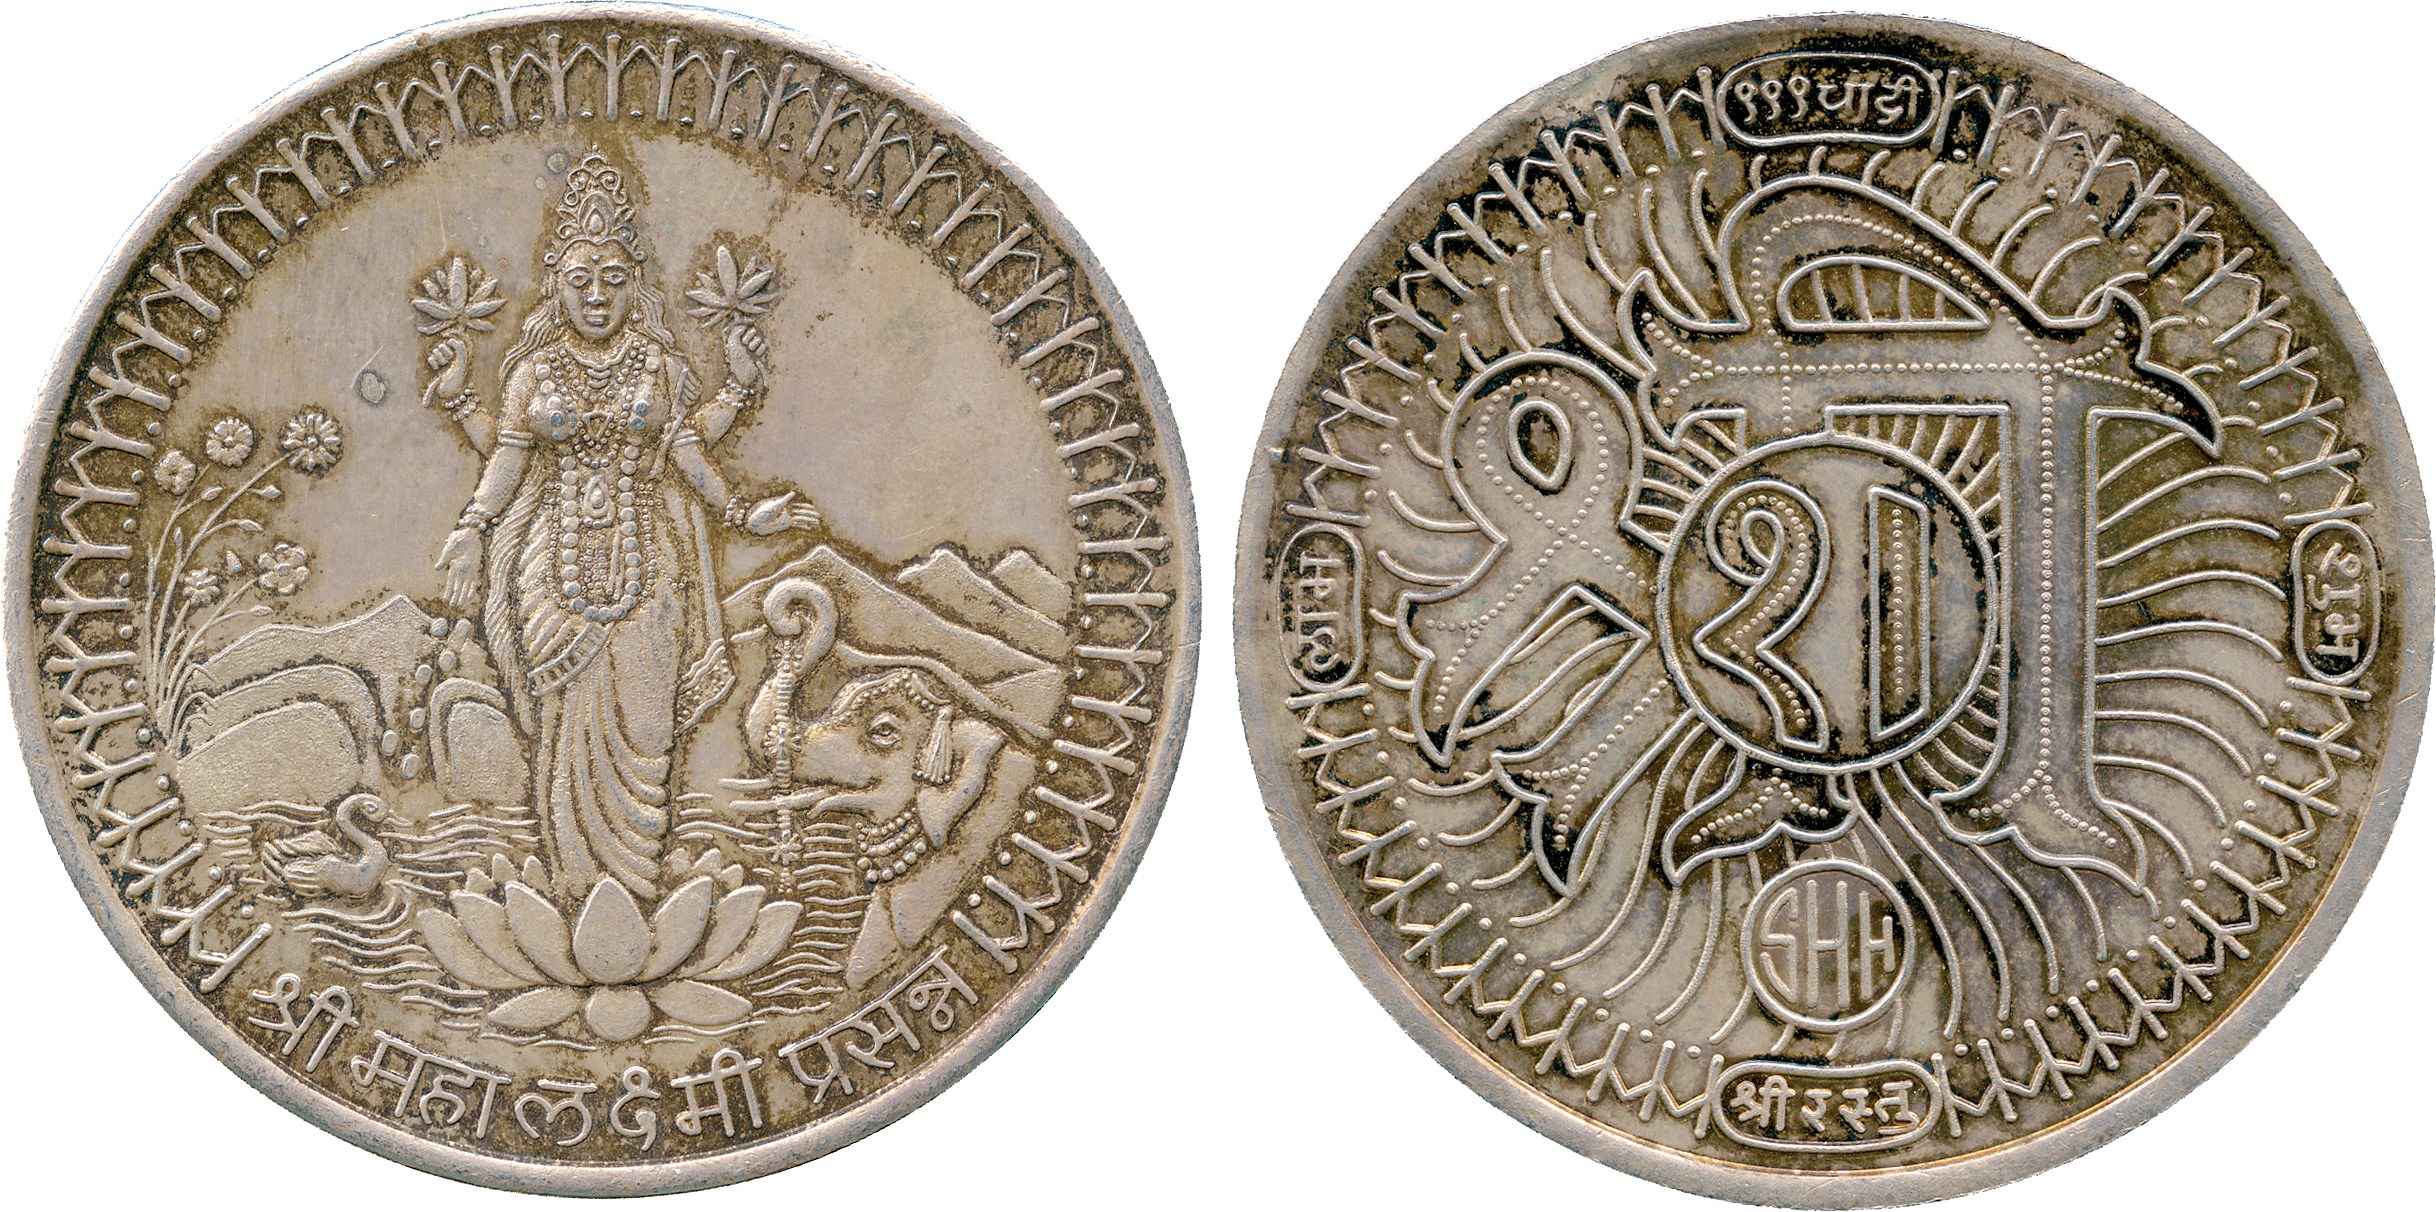 WORLD COMMEMORATIVE MEDALS, Art Medals, India, Silver Medal of Good Fortune, the Goddess Lakshmi